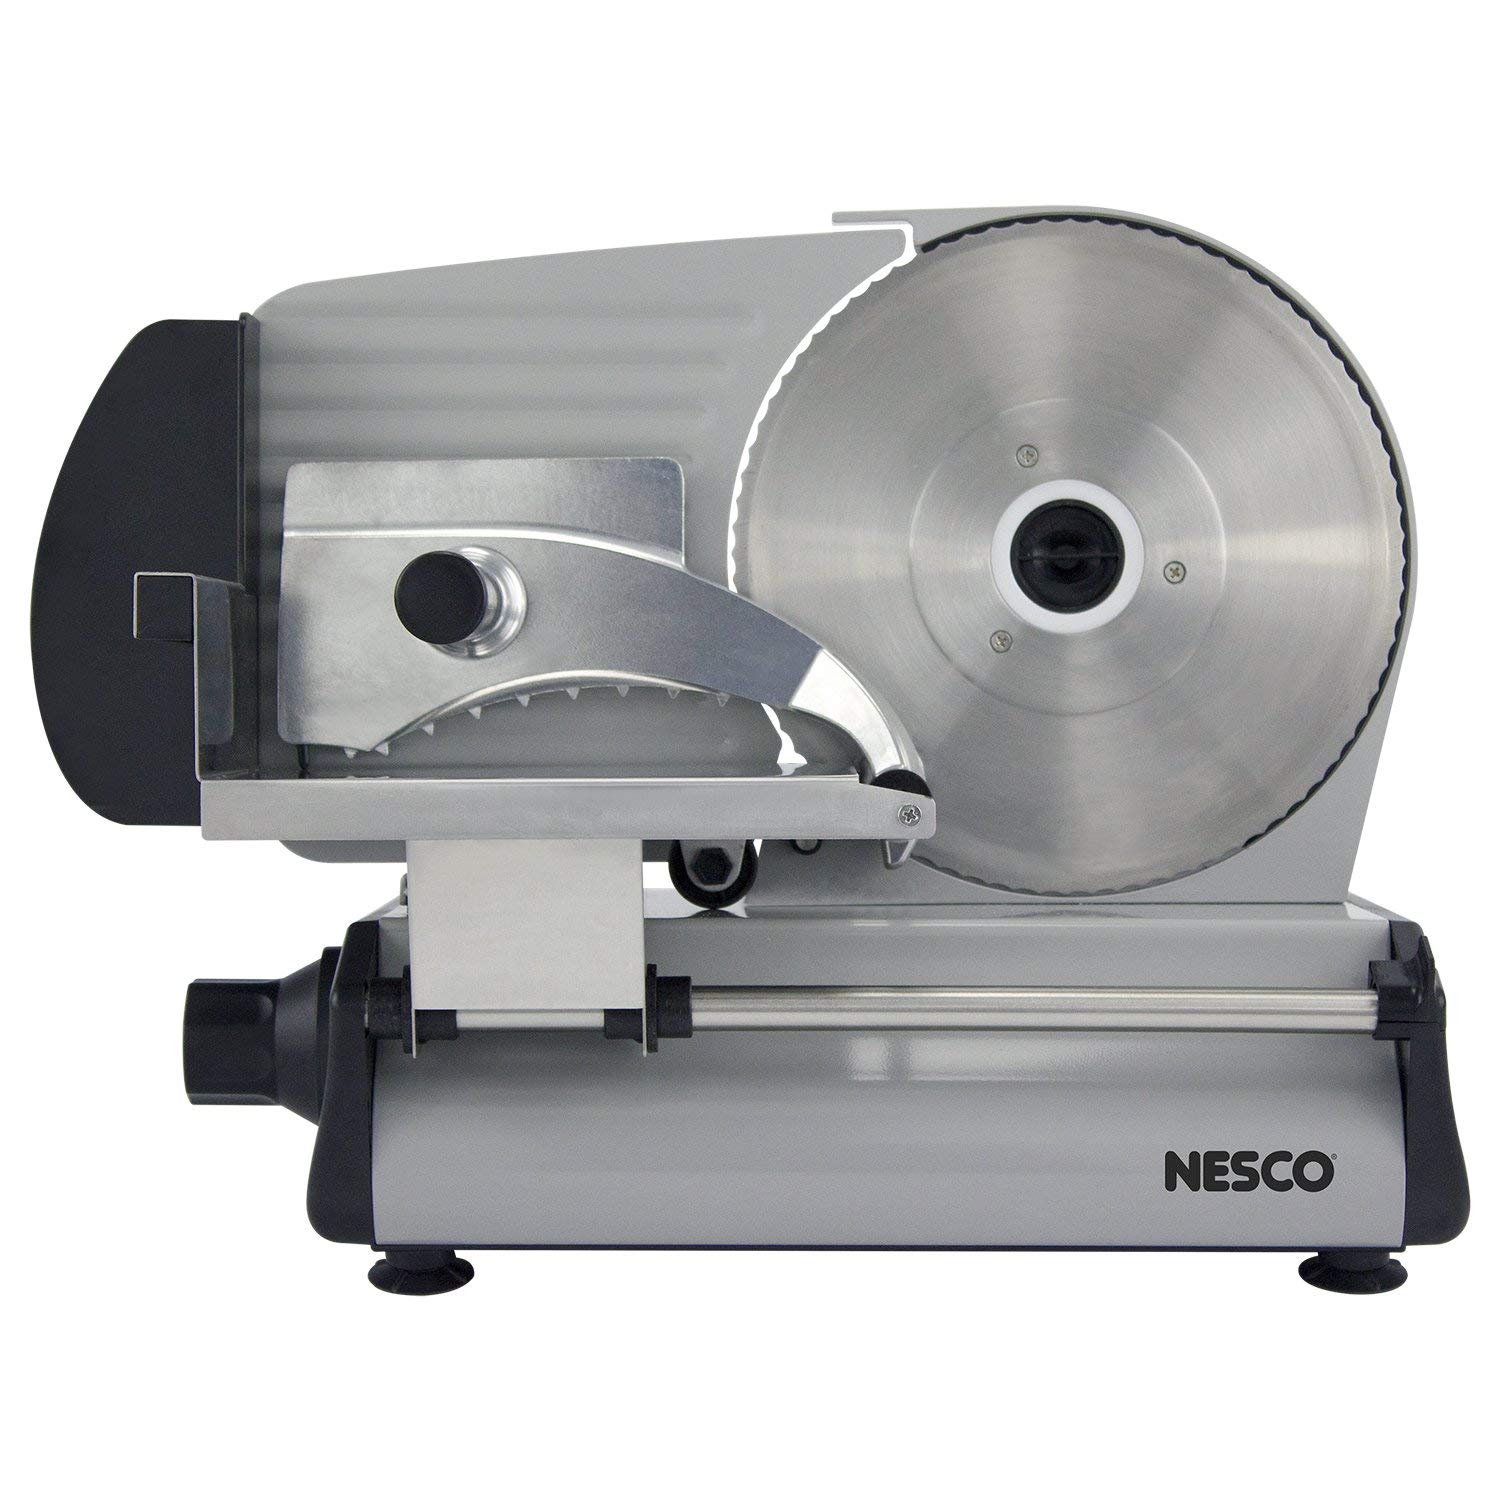 Nesco Automatic Adjustable Meat Slicer